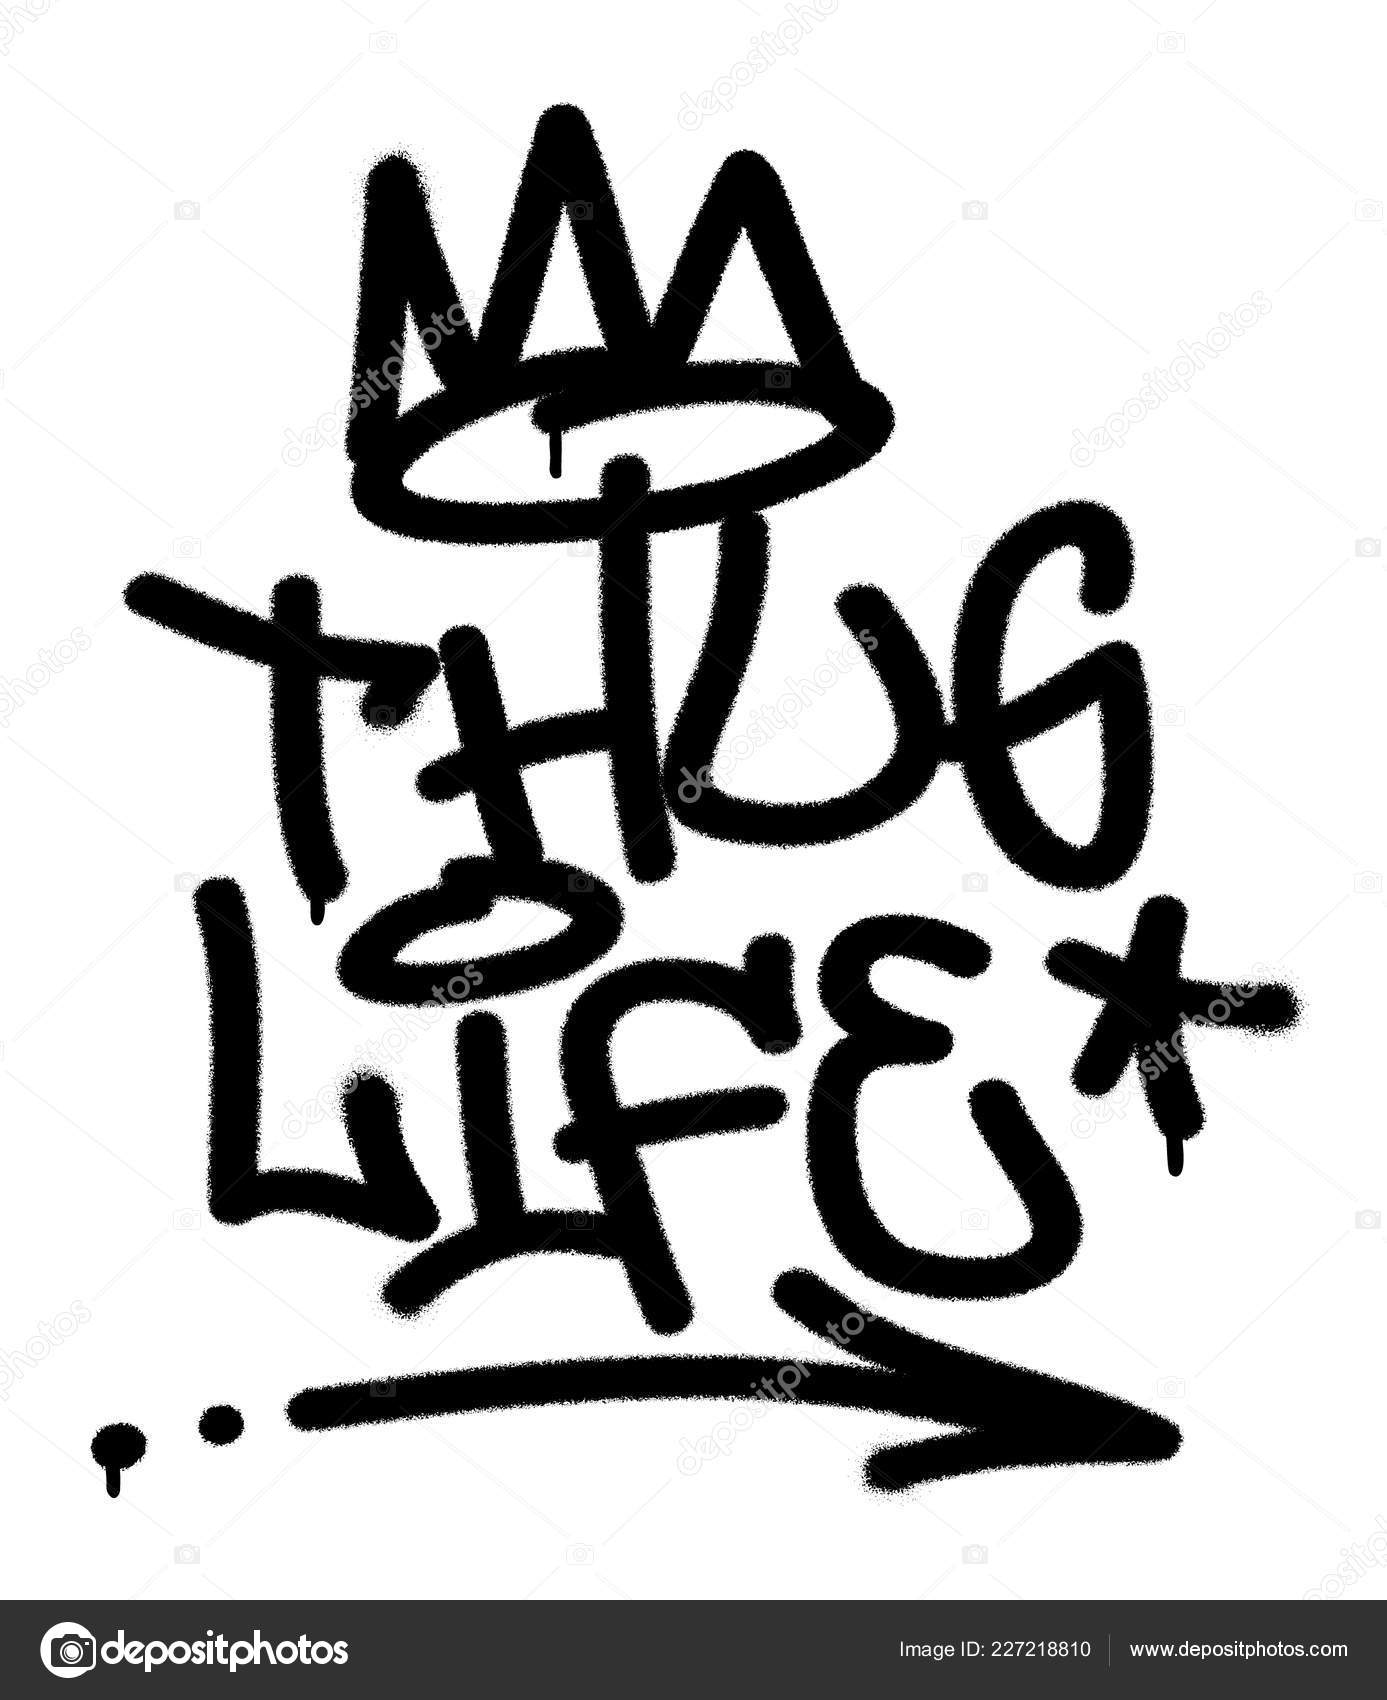 Iictures Thug Life Graffiti Spray Graffiti Tag Thug Life Signs Stylized Crown Star Arrow Stock Vector C 1981srb 227218810